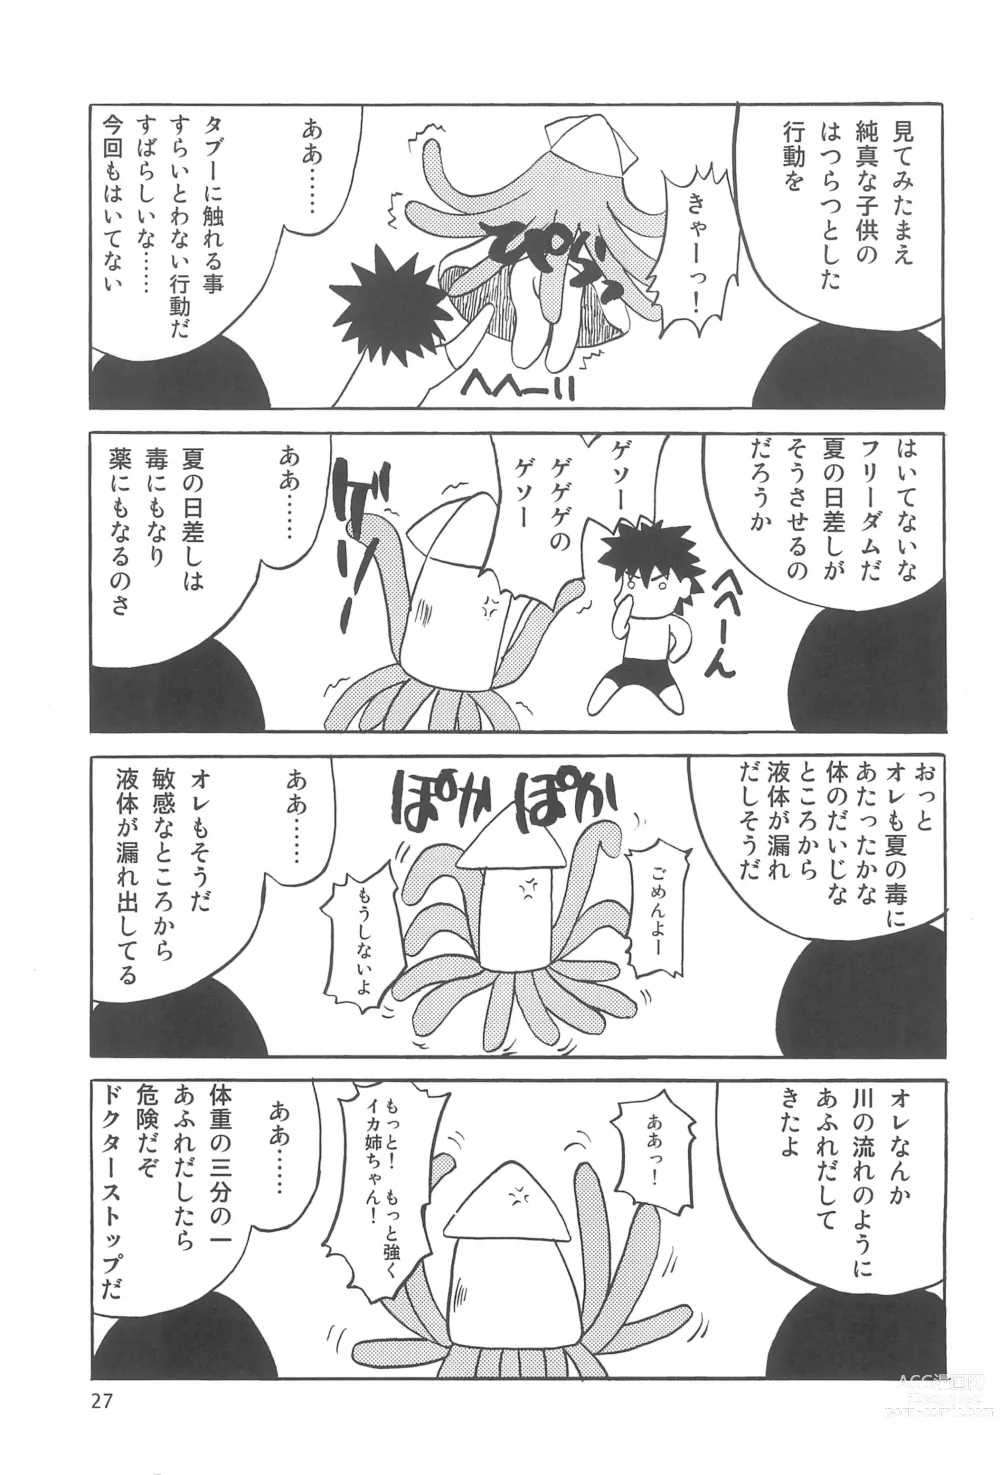 Page 27 of doujinshi Gegeso no Nyuubou